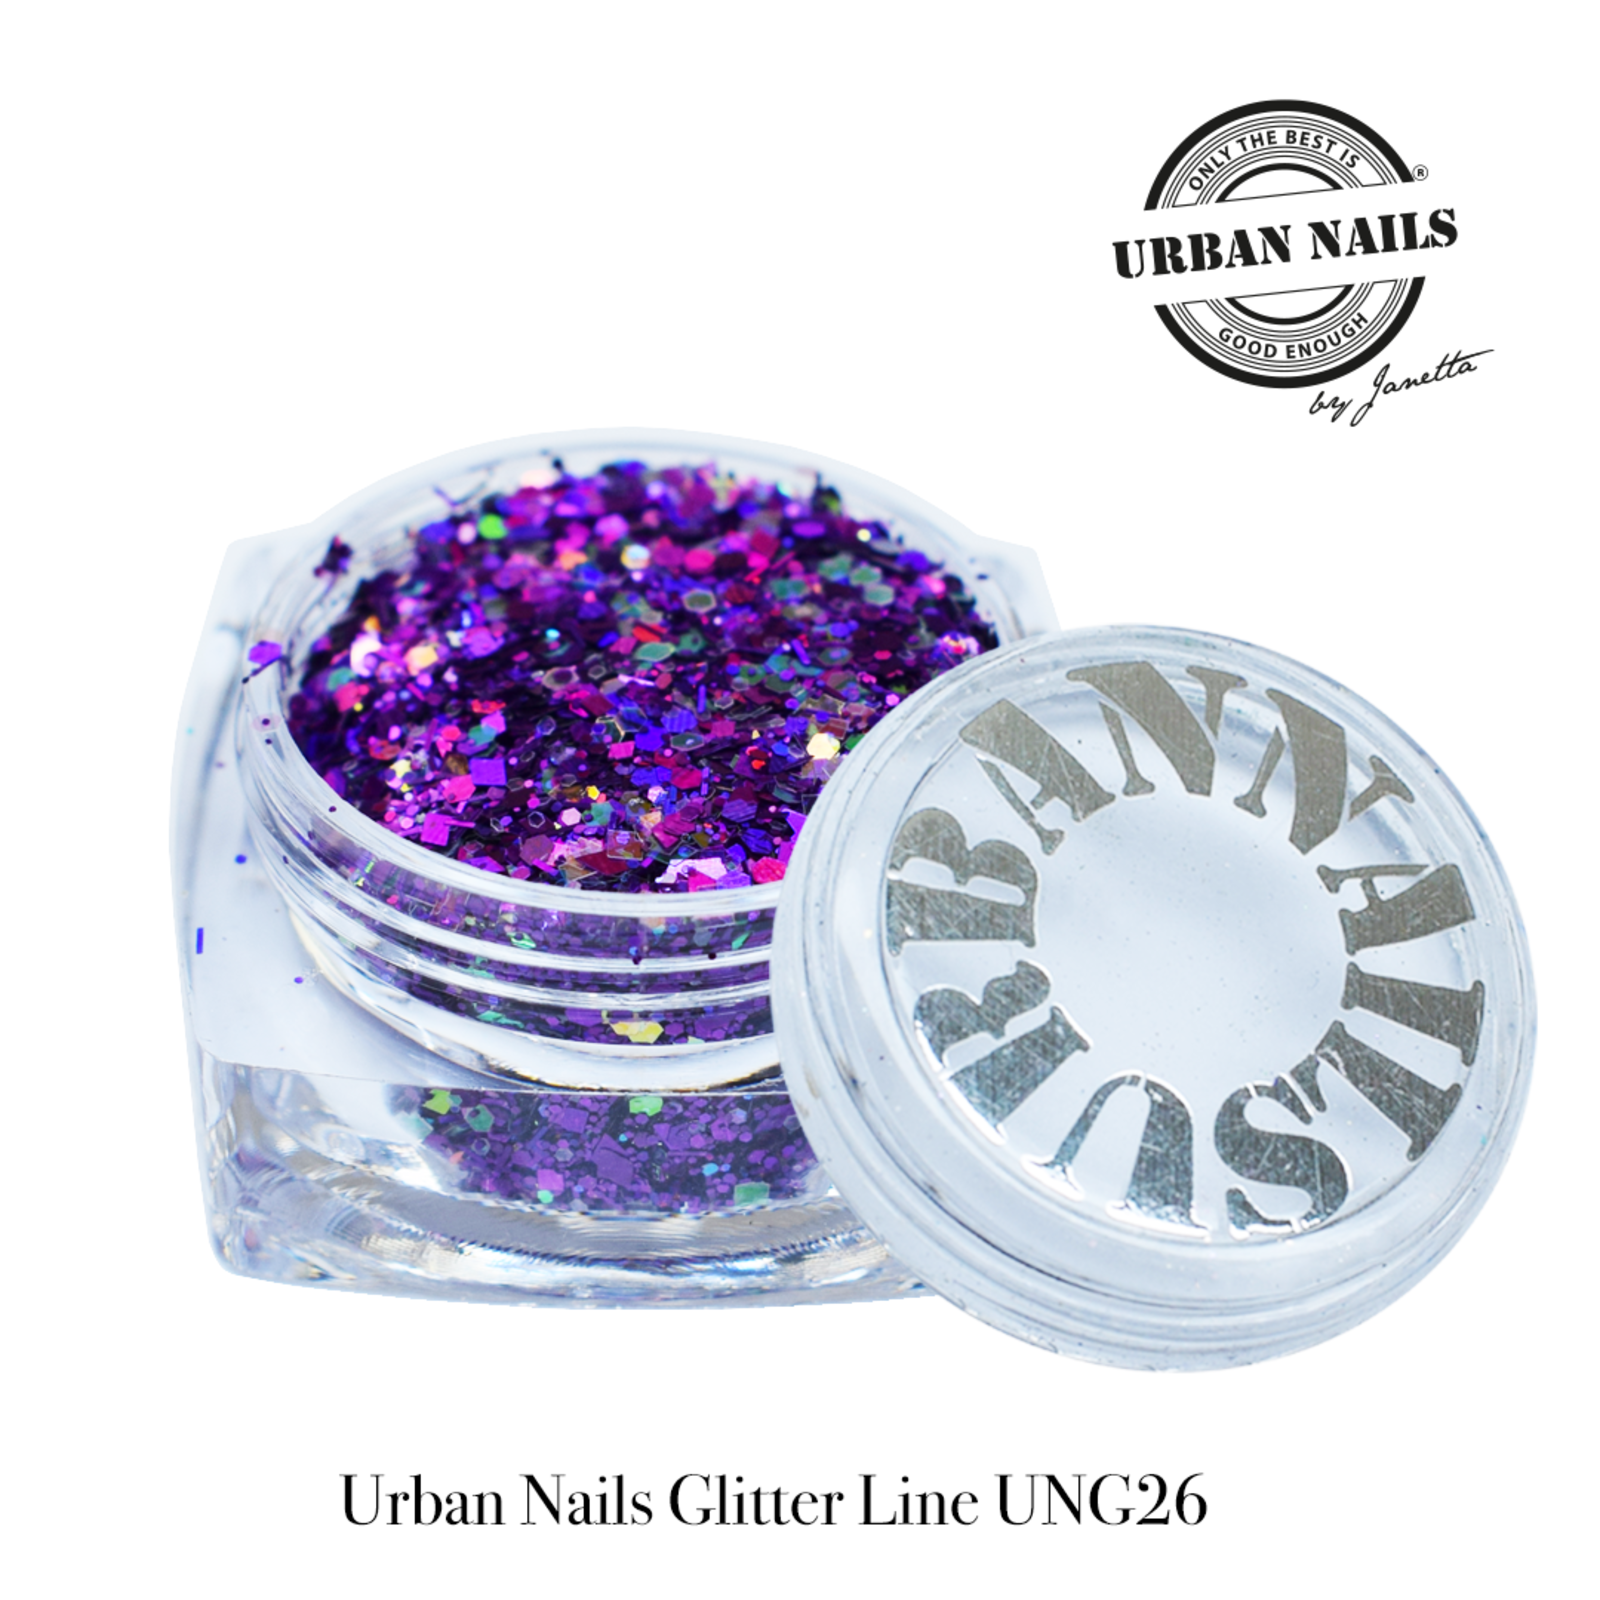 Urban nails Glitter Line UNG26